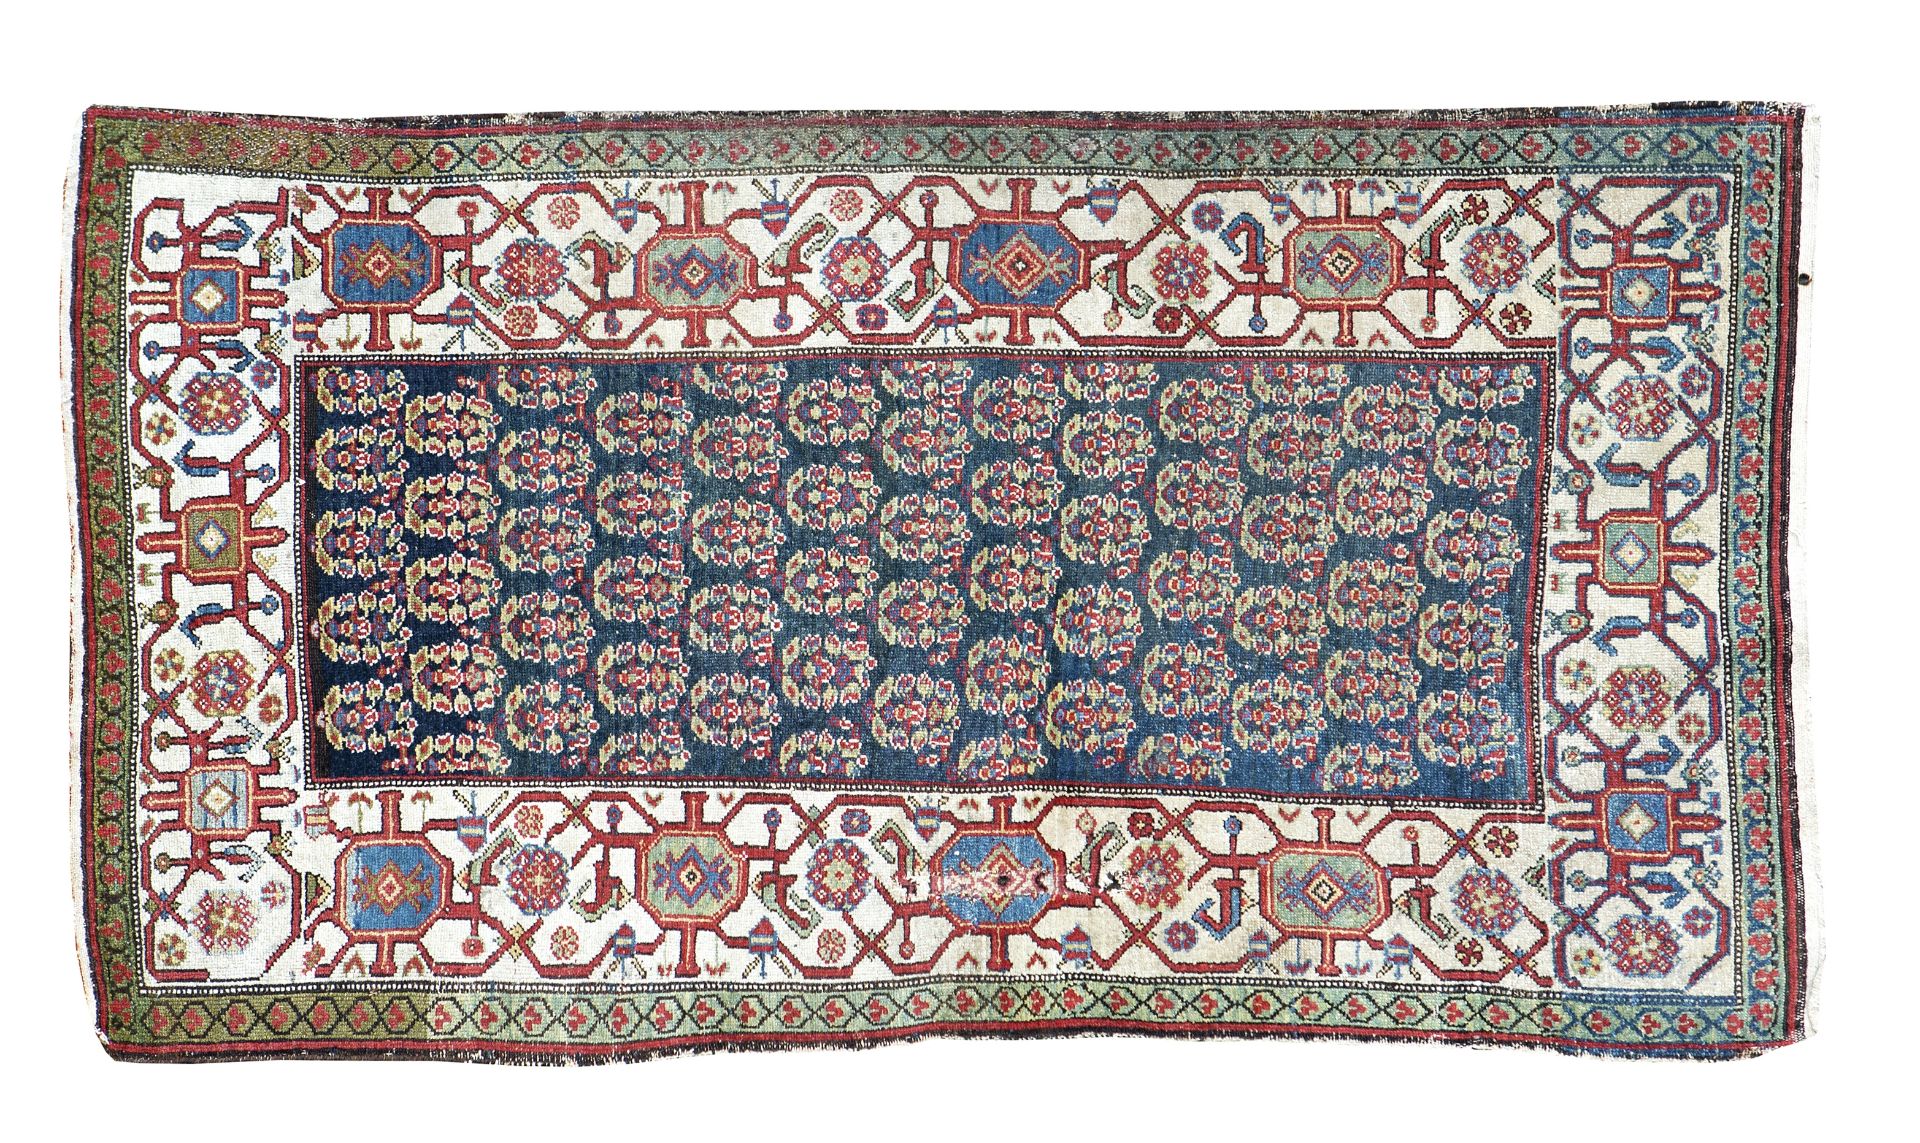 A Bijar rug Early 20th century 200cm x 126cm and 201cm x 110cm respectively